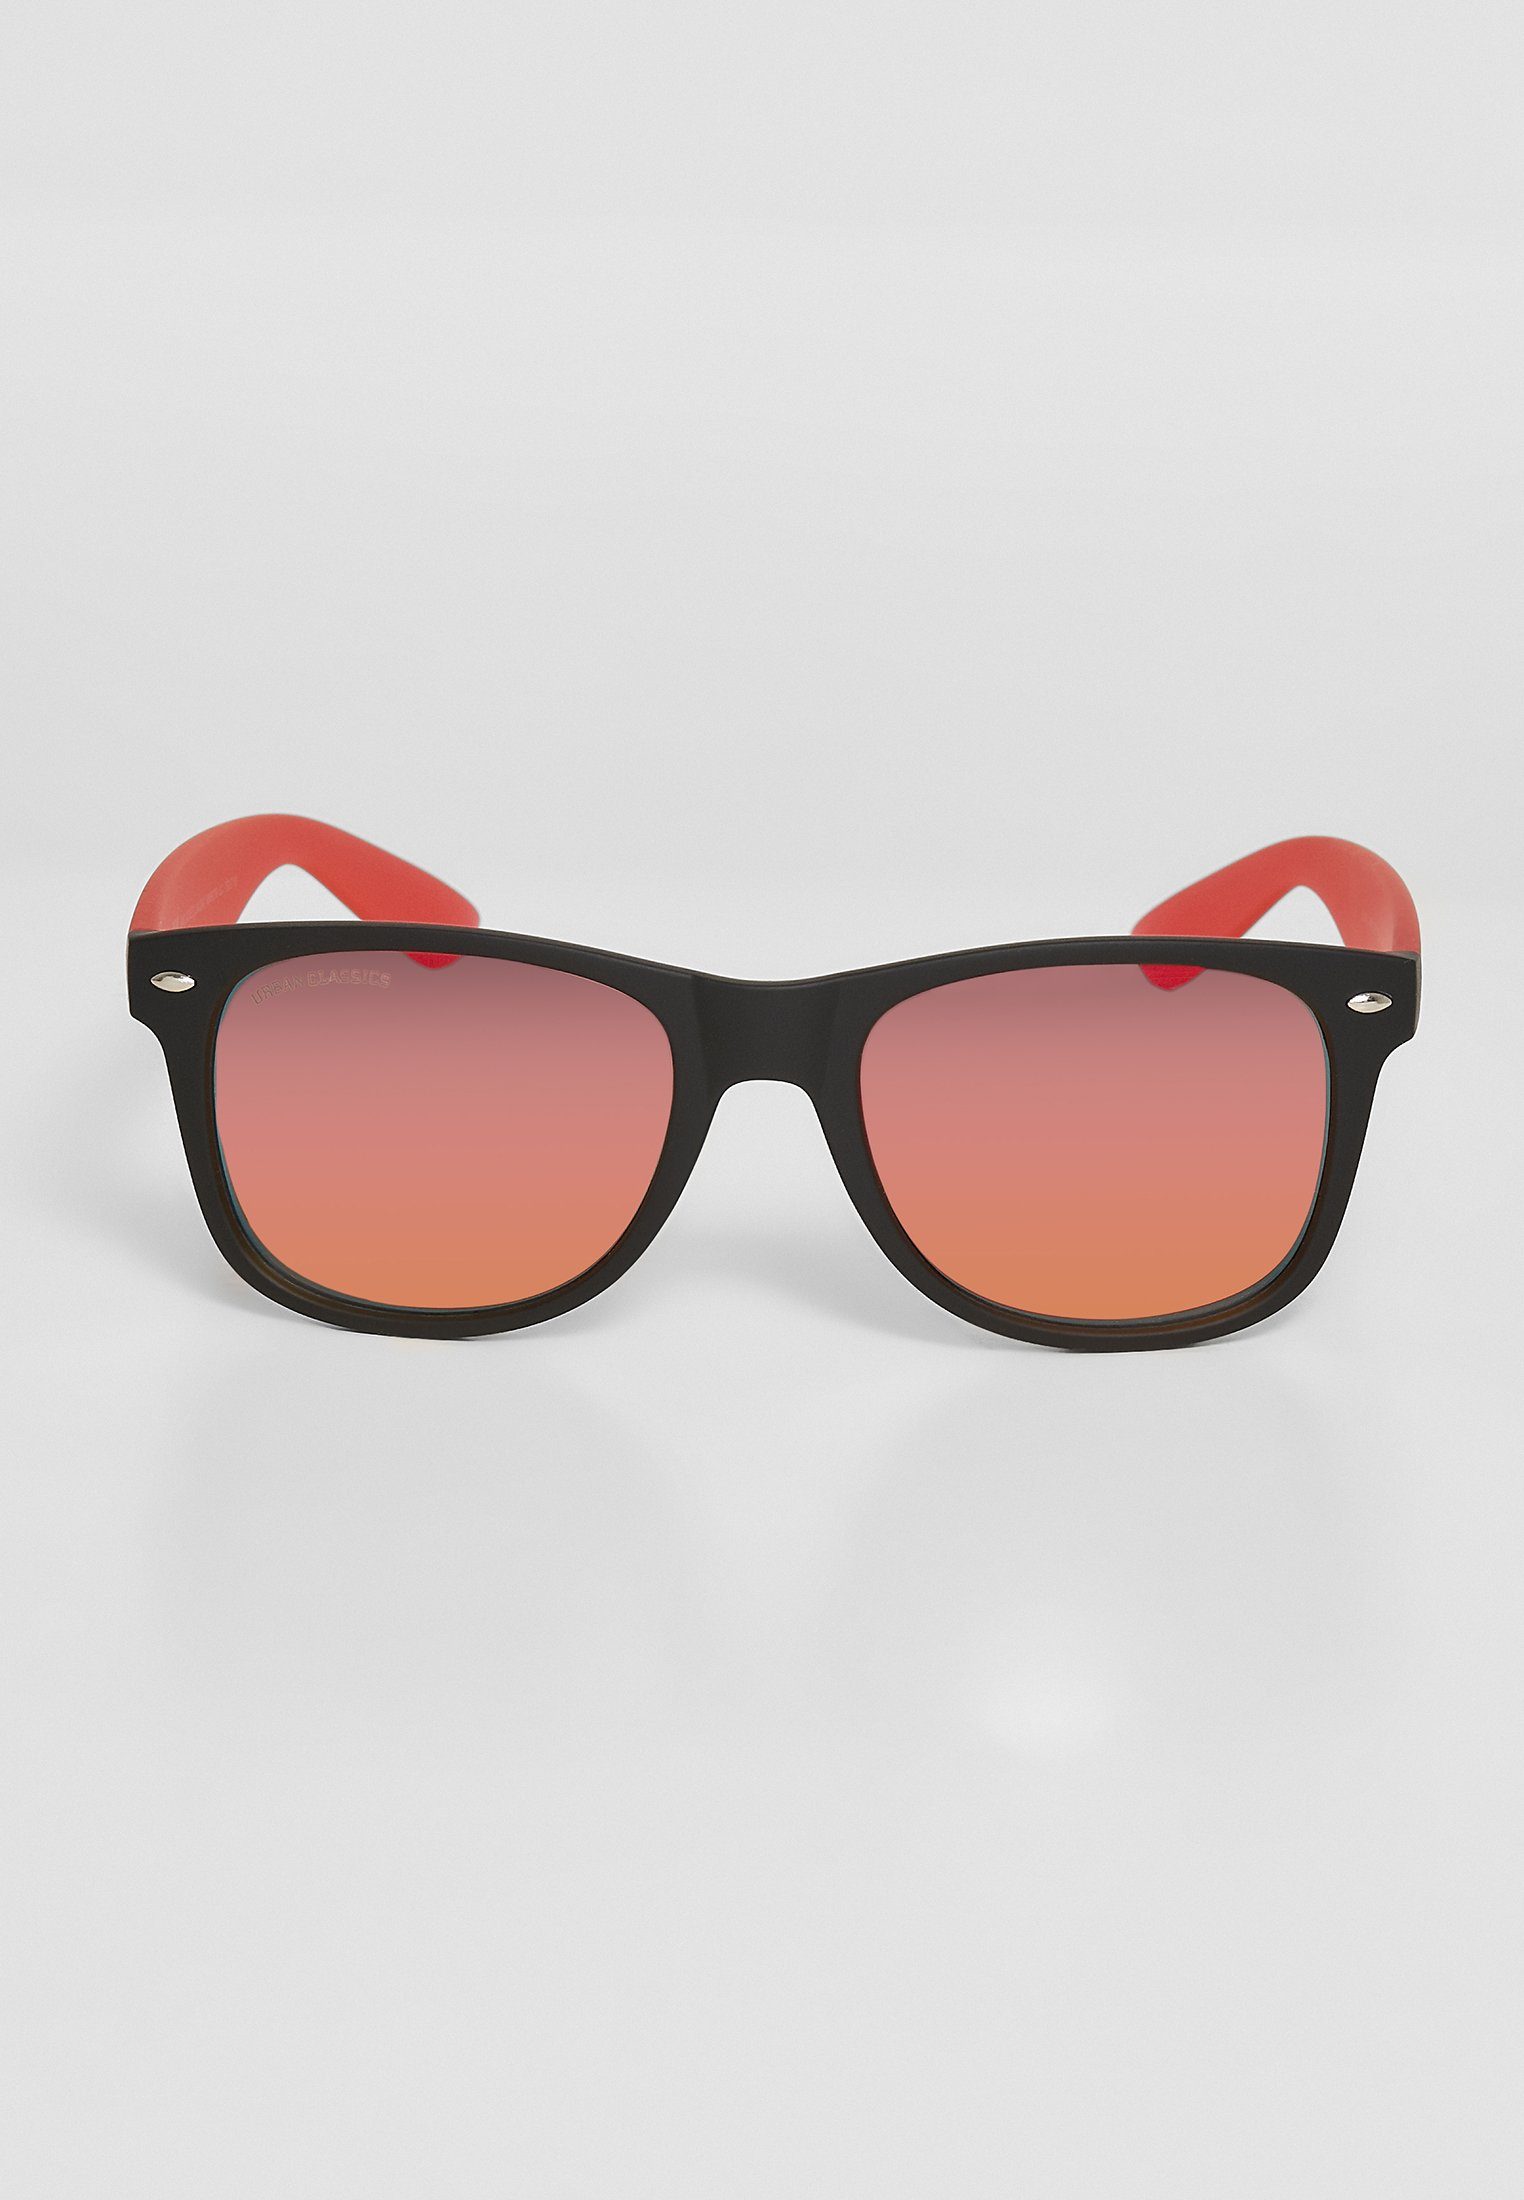 UC URBAN Accessoires Likoma black/red Mirror Sunglasses CLASSICS Sonnenbrille